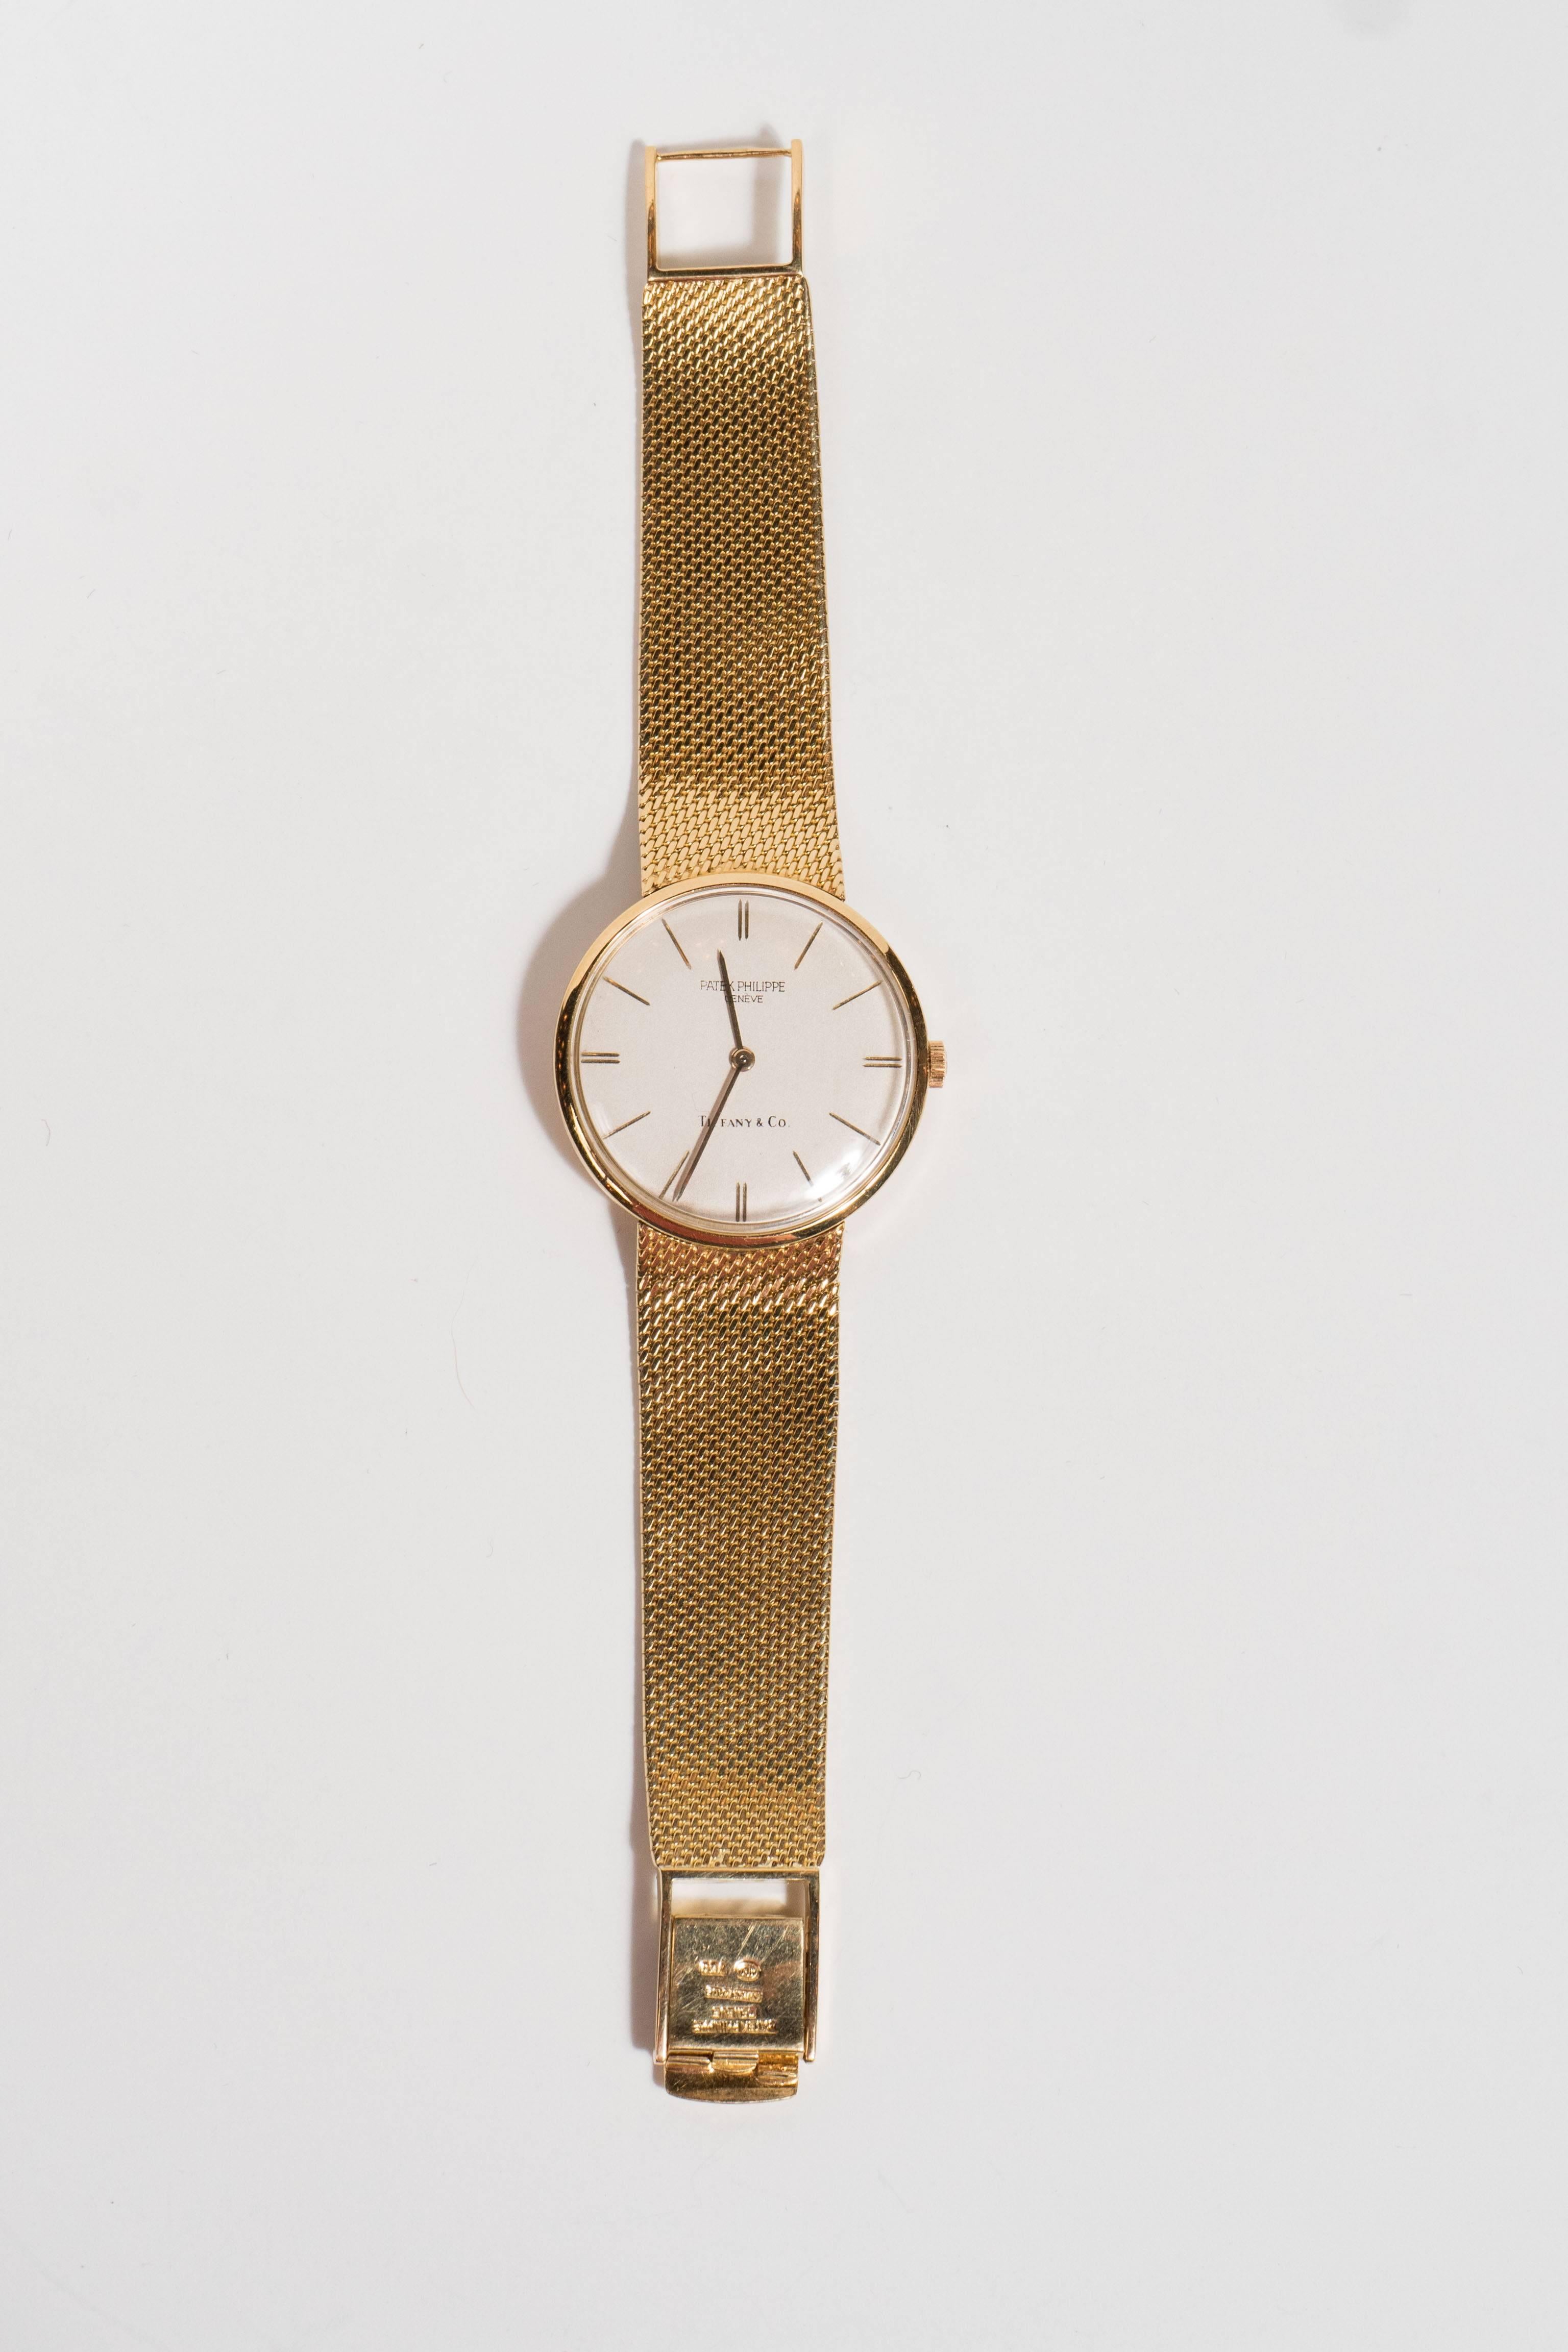 Patek Phillipe for Tiffany & Co. Yellow Gold Manual Wind Wristwatch 3